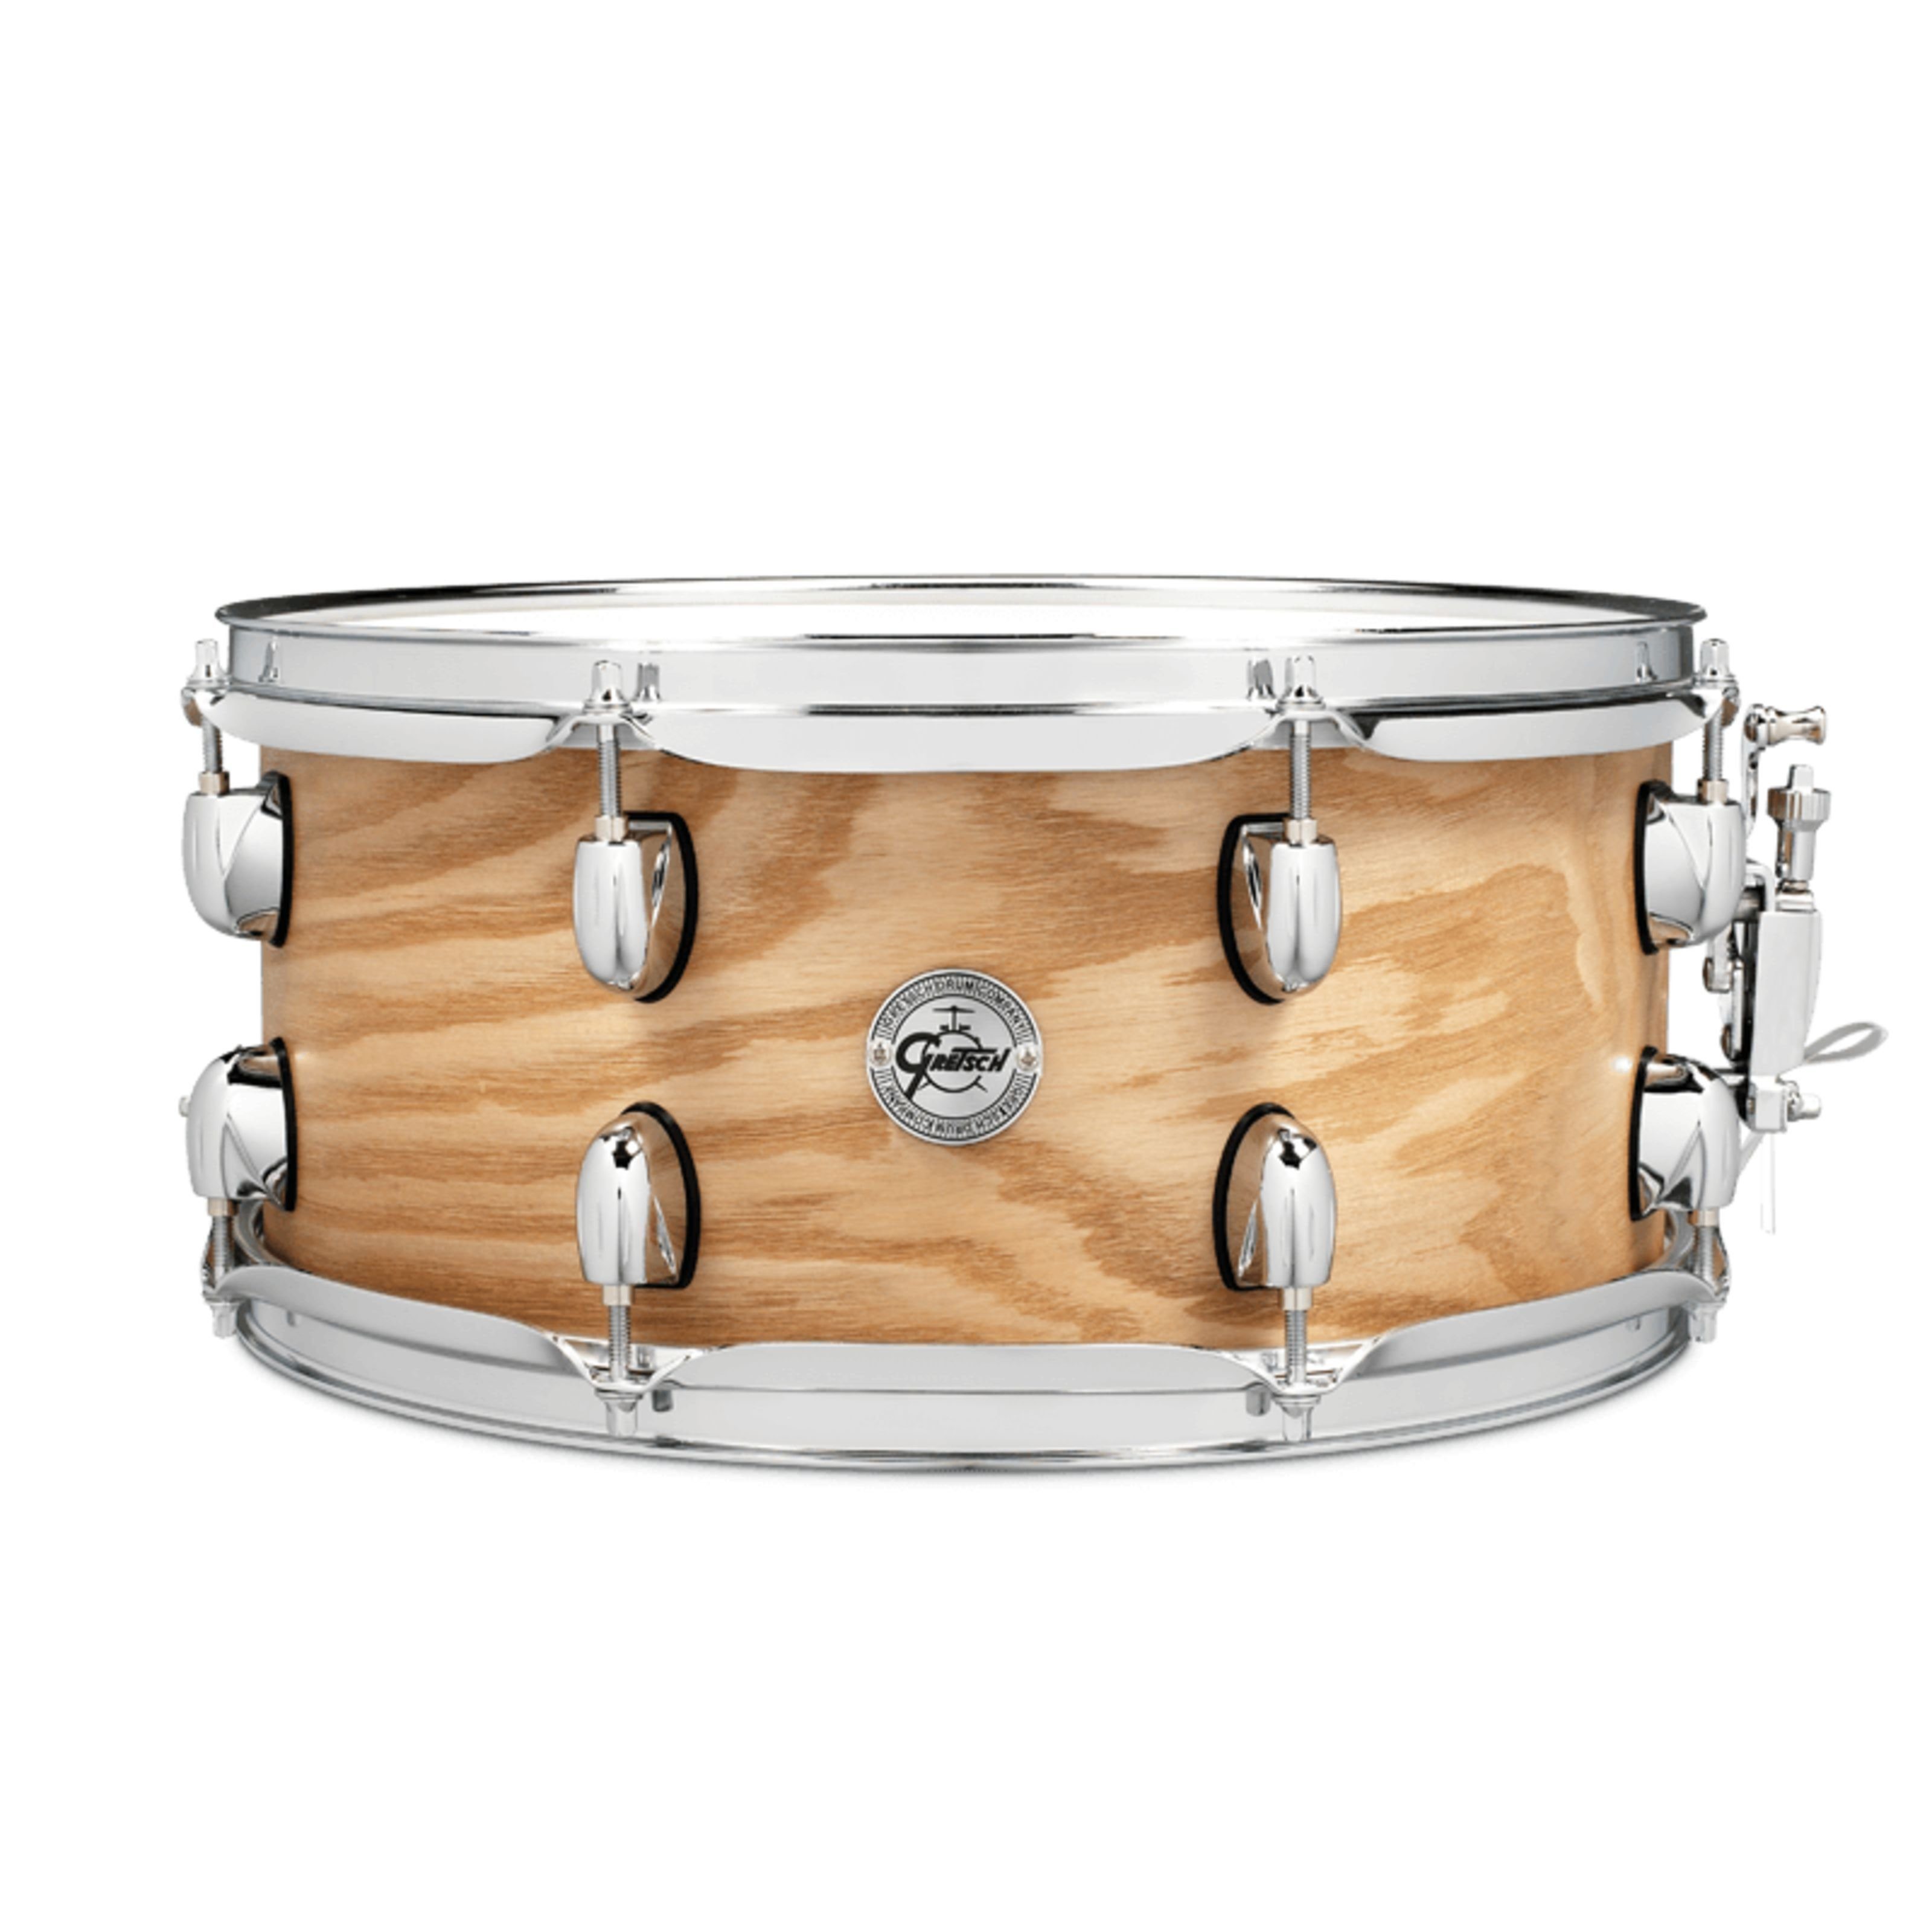 Gretsch Snare Drum,S1-6514-ASHSN Full Range Ash Snare 14"x6,5", Schlagzeuge, Snare Drums, S1-6514-ASHSN Full Range Ash Snare 14"x6,5" - Snare Drum